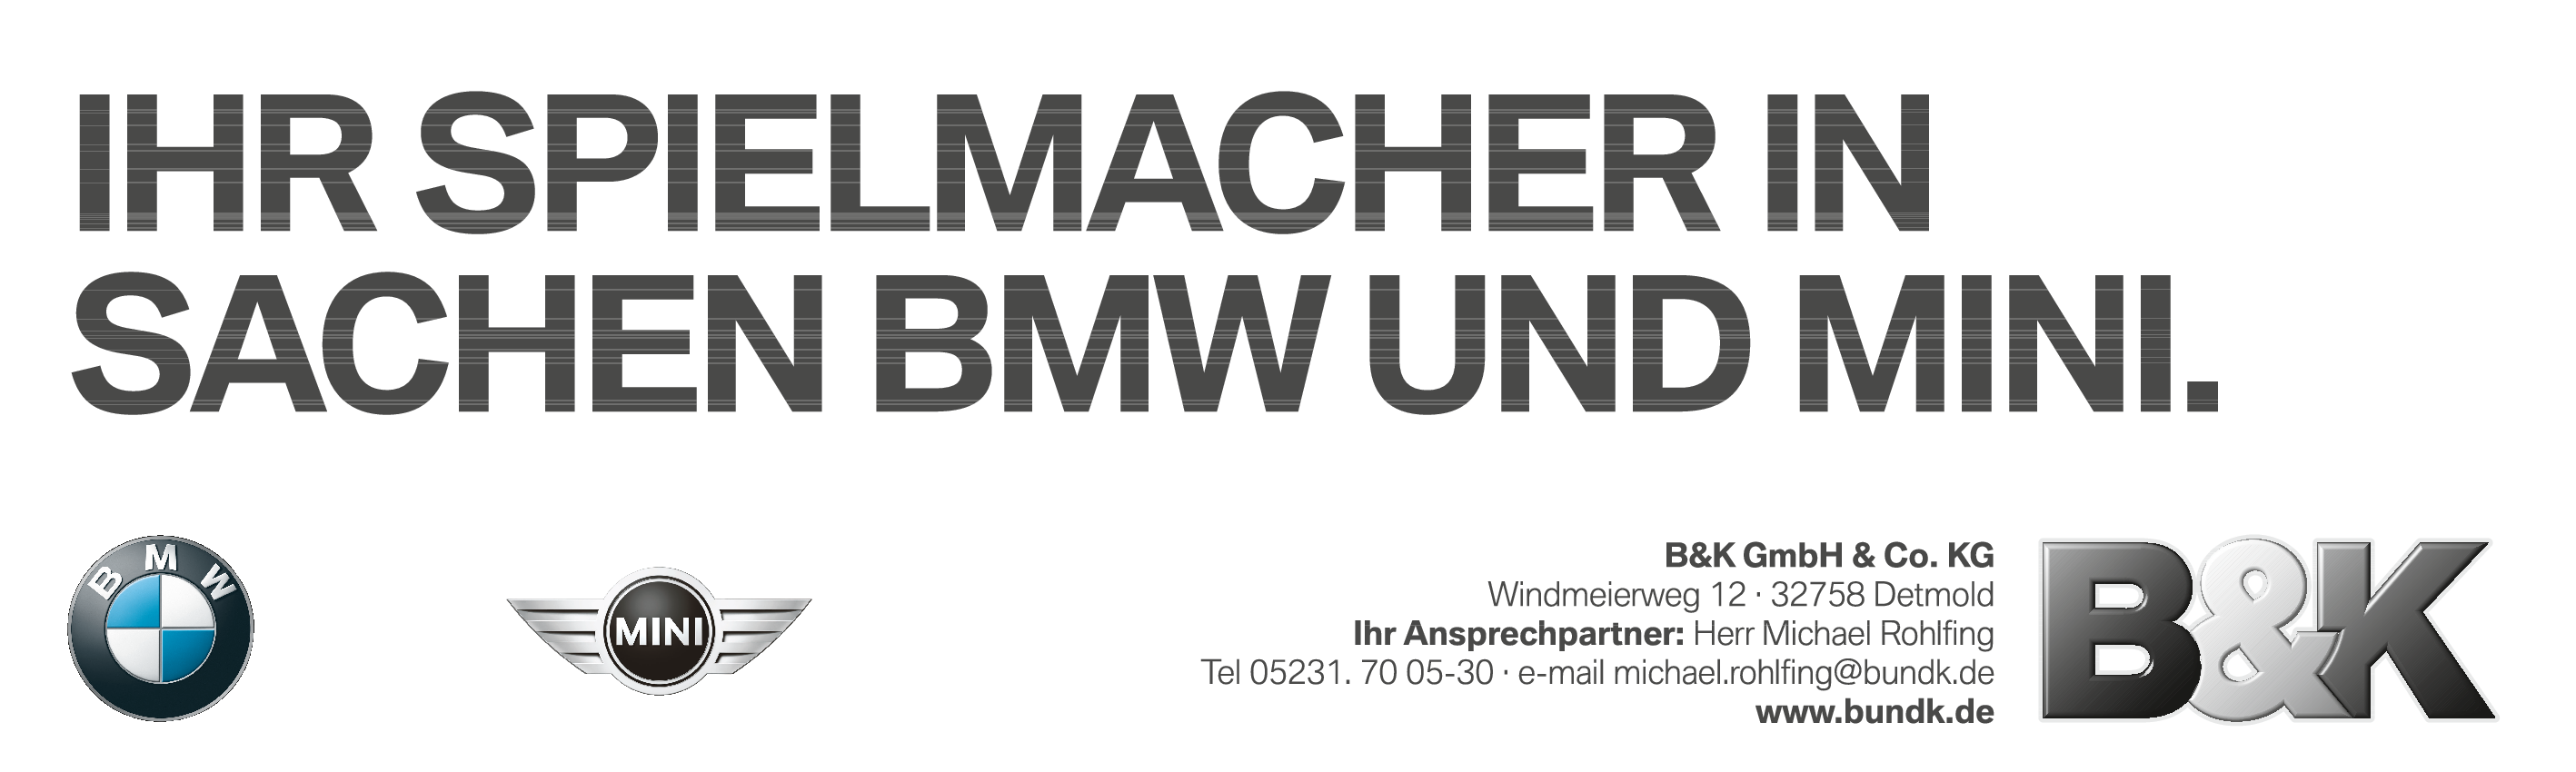 B&K BMW Mini Detmold